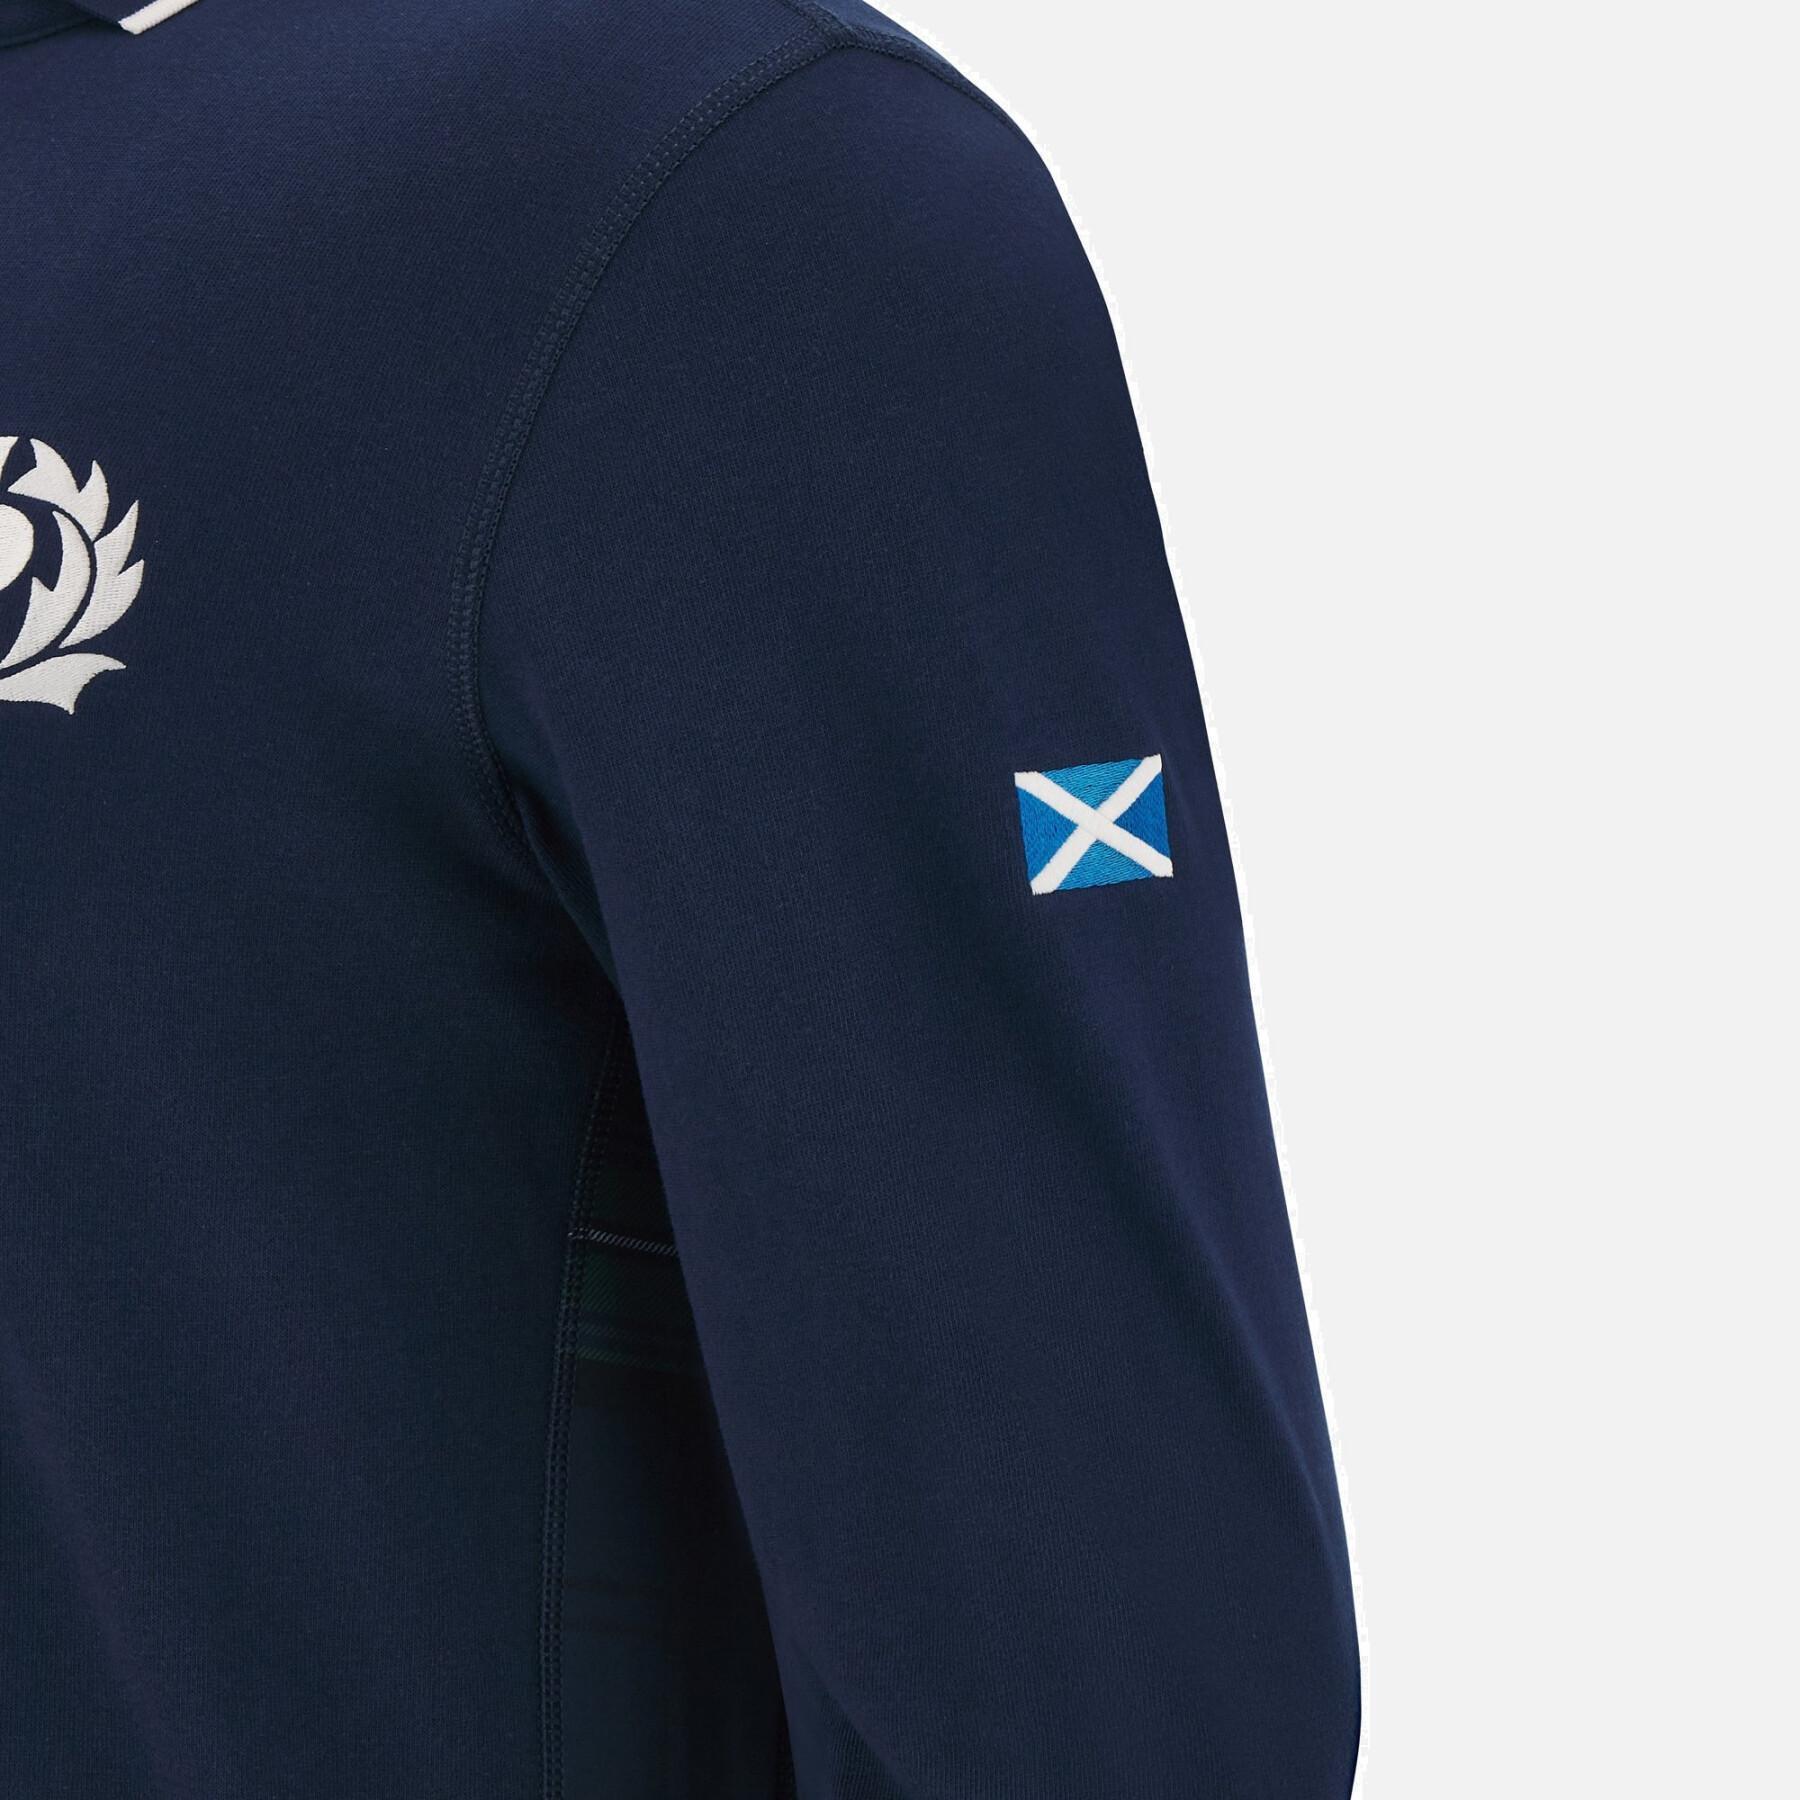 Long-sleeved home polo shirt scotland RWC 2023